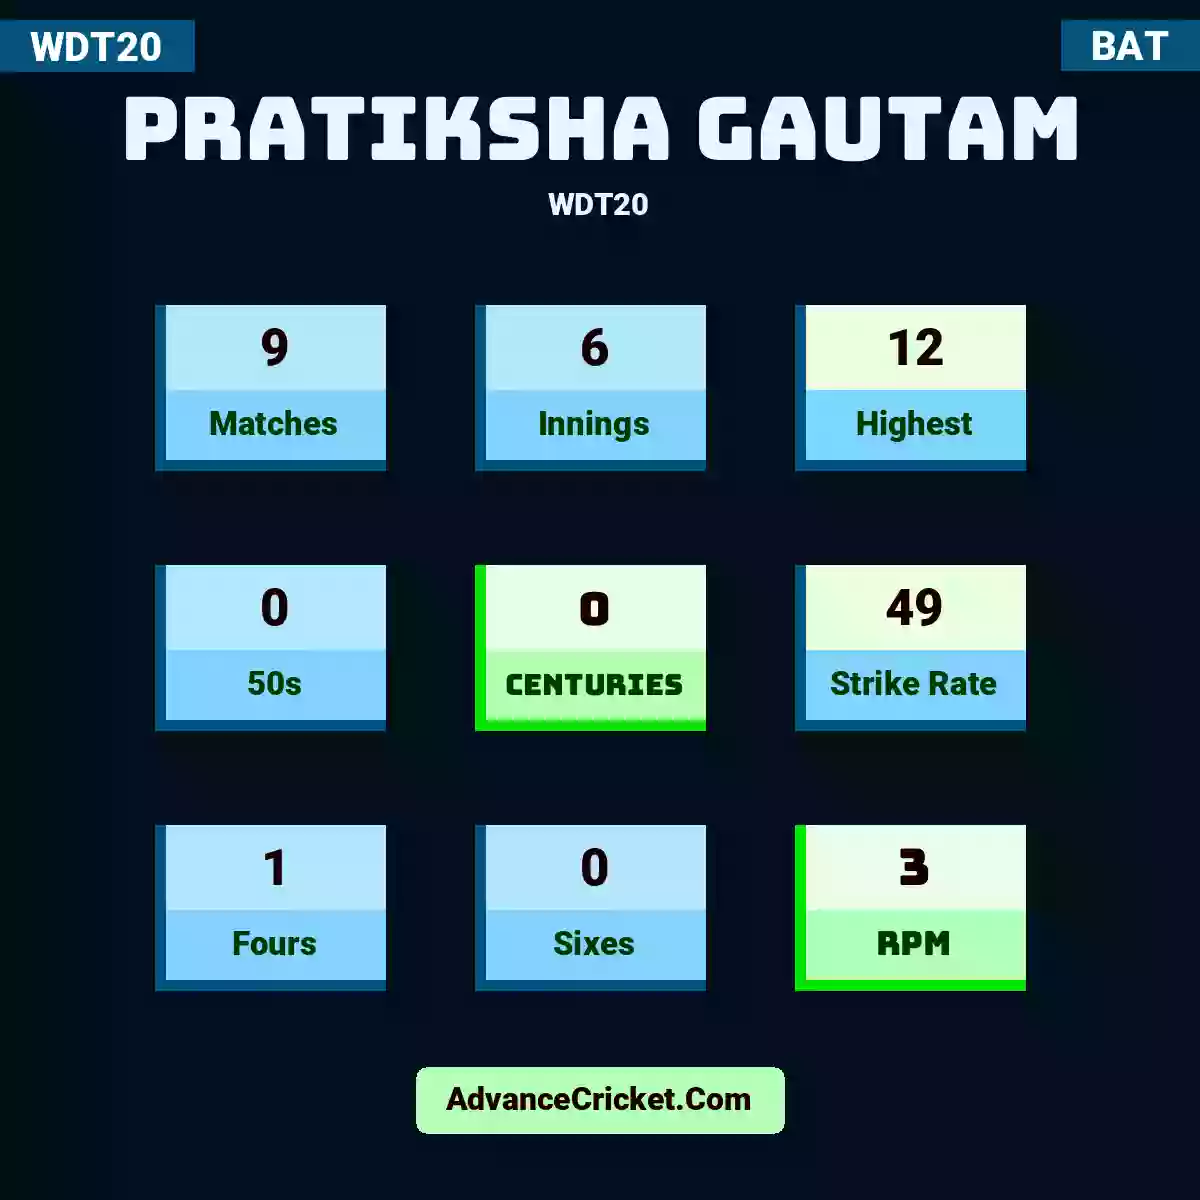 Pratiksha Gautam WDT20 , Pratiksha Gautam played 9 matches, scored 12 runs as highest, 0 half-centuries, and 0 centuries, with a strike rate of 49. P.Gautam hit 1 fours and 0 sixes, with an RPM of 3.